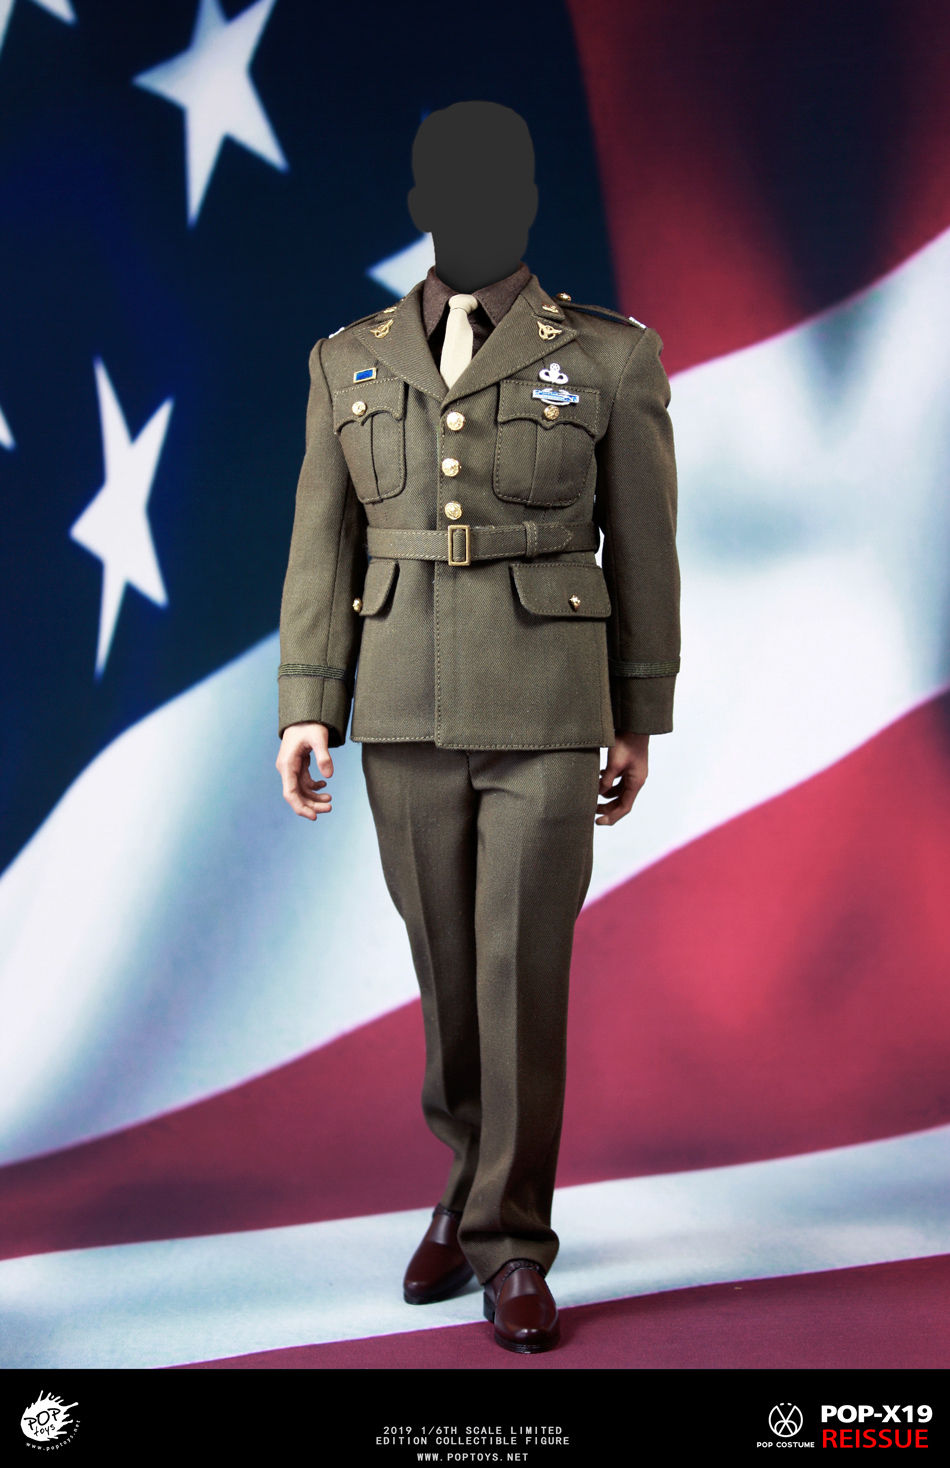 WWII - NEW PRODUCT: POPTOYS: 1/6 Series X19 World War II Edition Golden Age US Team Uniform Uniform Set - 19 Years Reprint 15021210